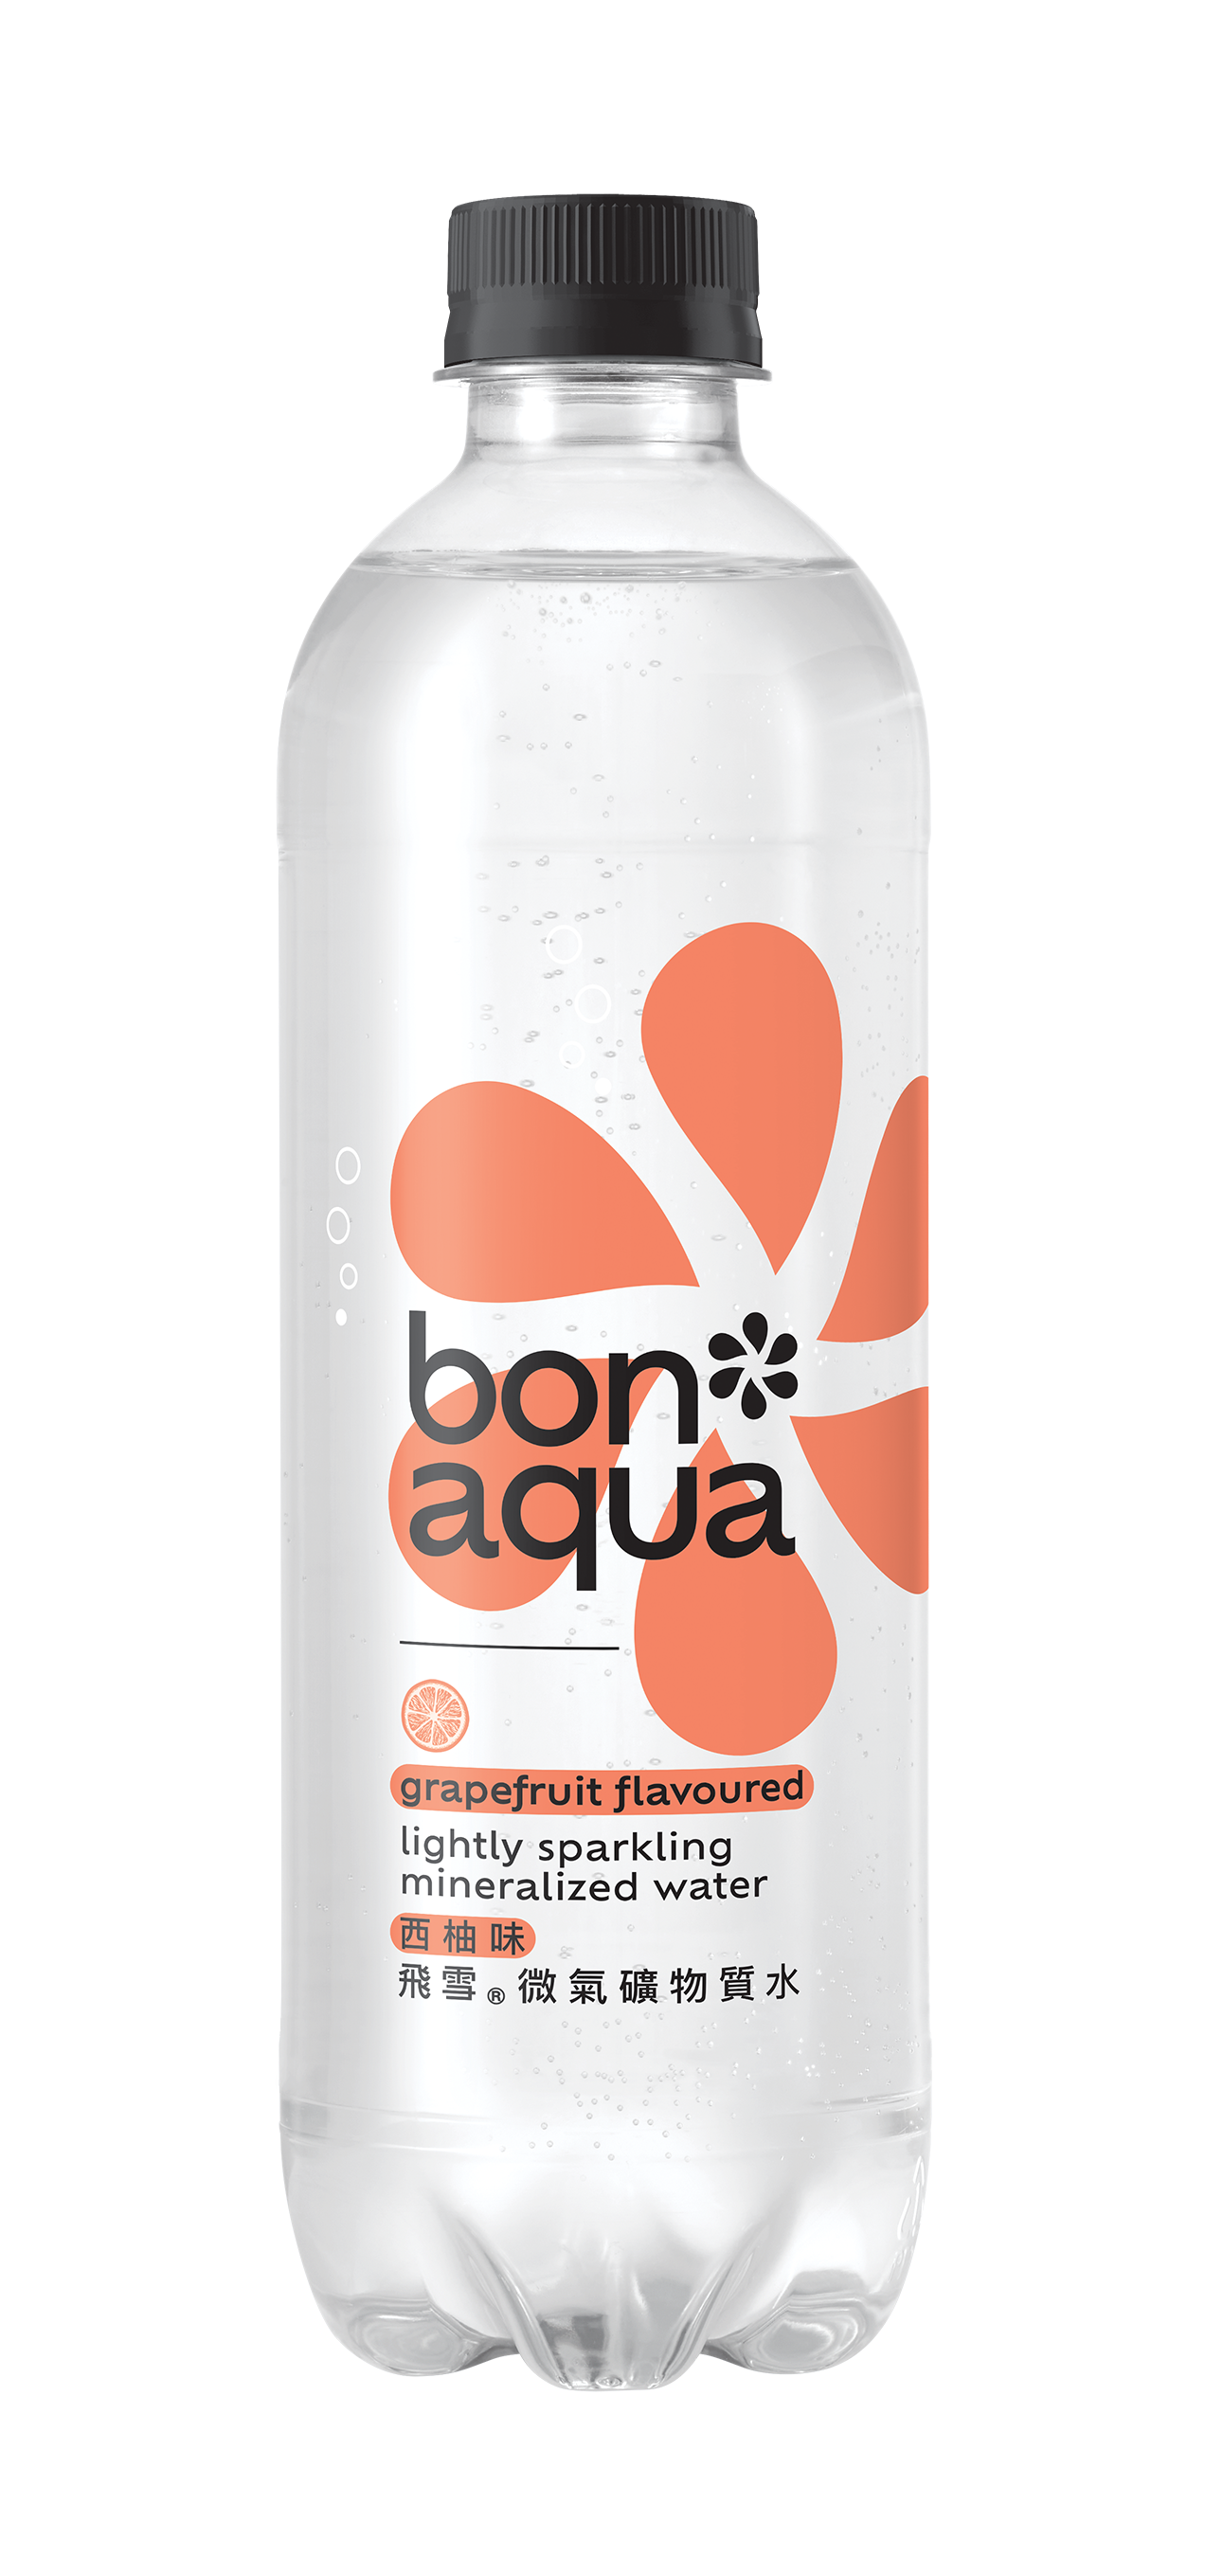 Bonaqua® Lightly Sparkling Mineralized Water Grapefruit Flavoured bottle